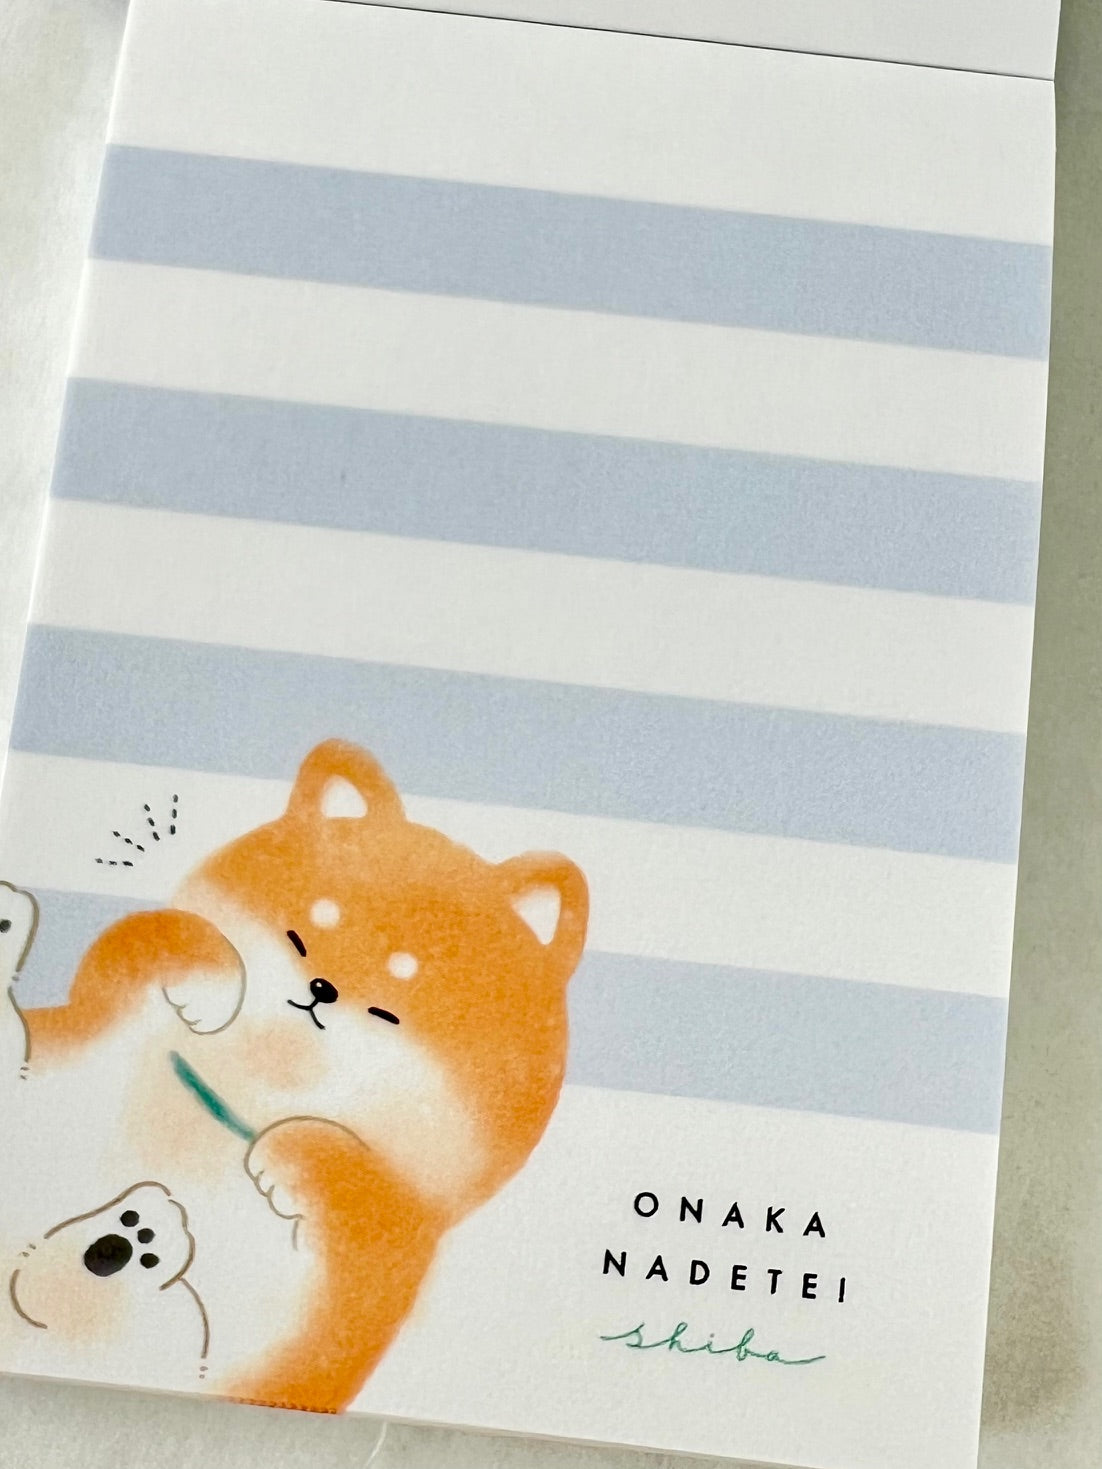 114108 CRUX Shiba Dog Mini Notepad-10